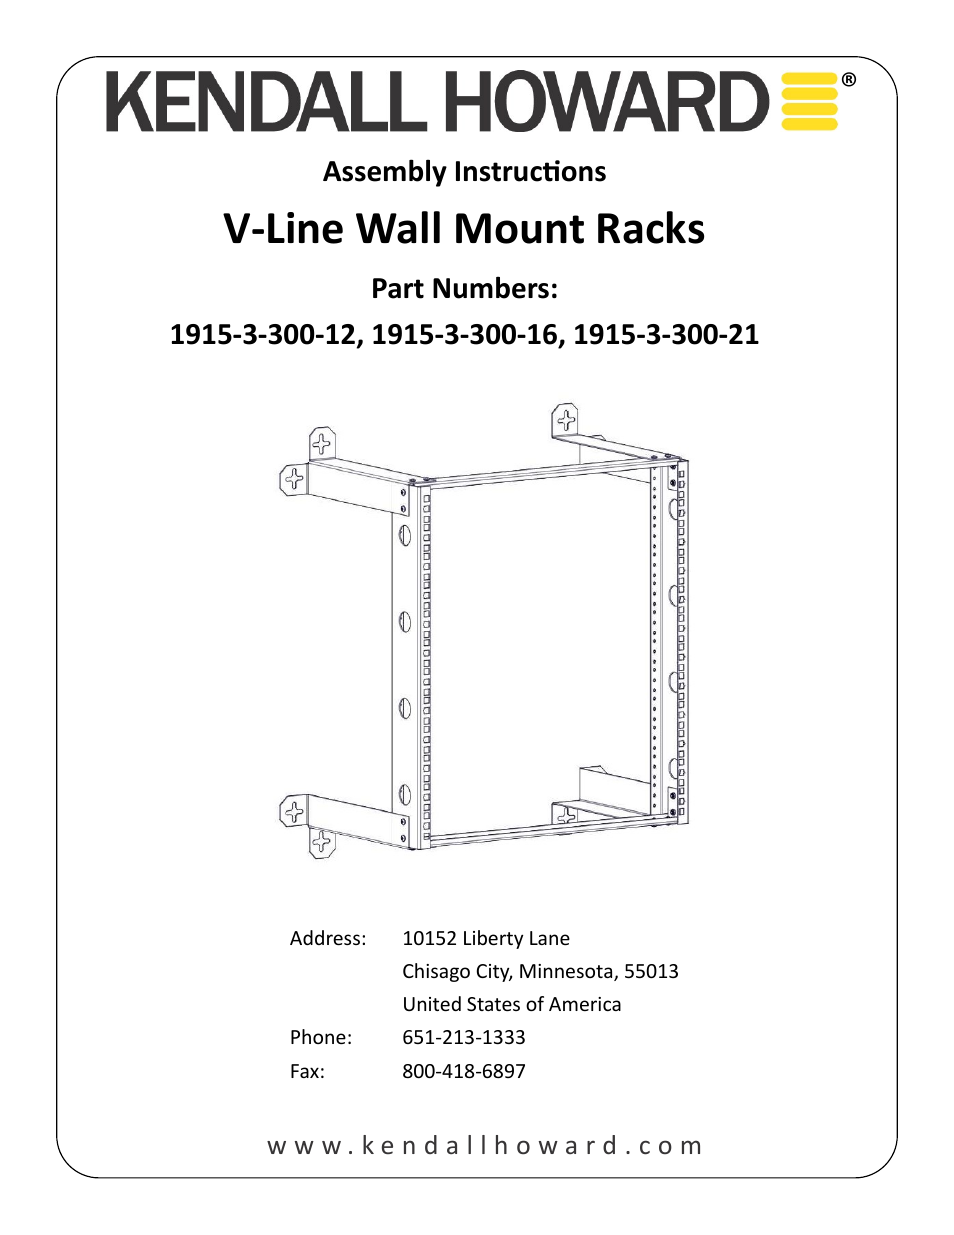 1915-3-300-16 16U V-Line Wall Mount Rack